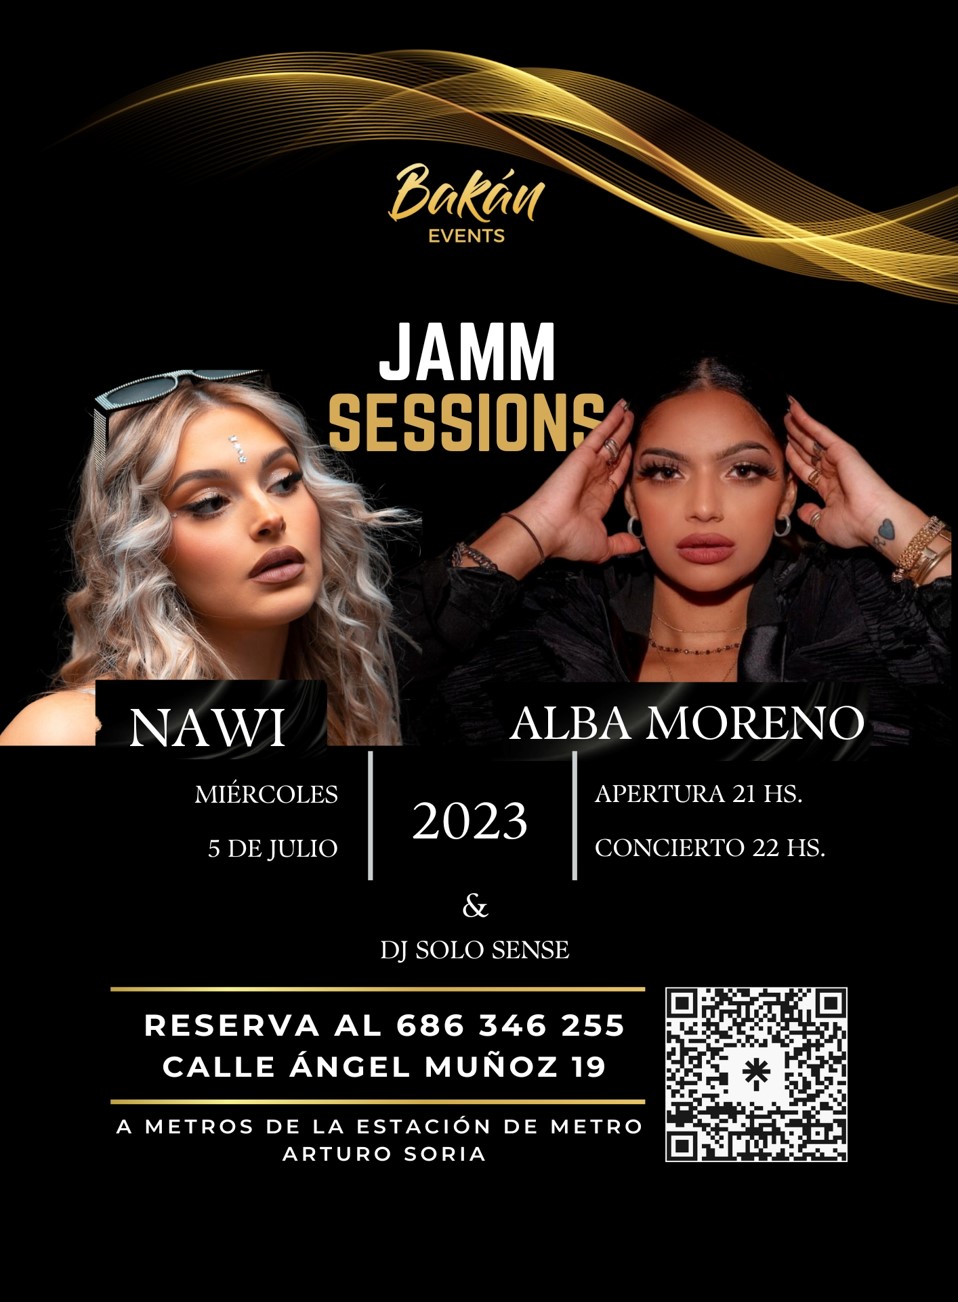 Jam Sessions con Alba Moreno, Nawi en Bakán - Madrid - Mutick